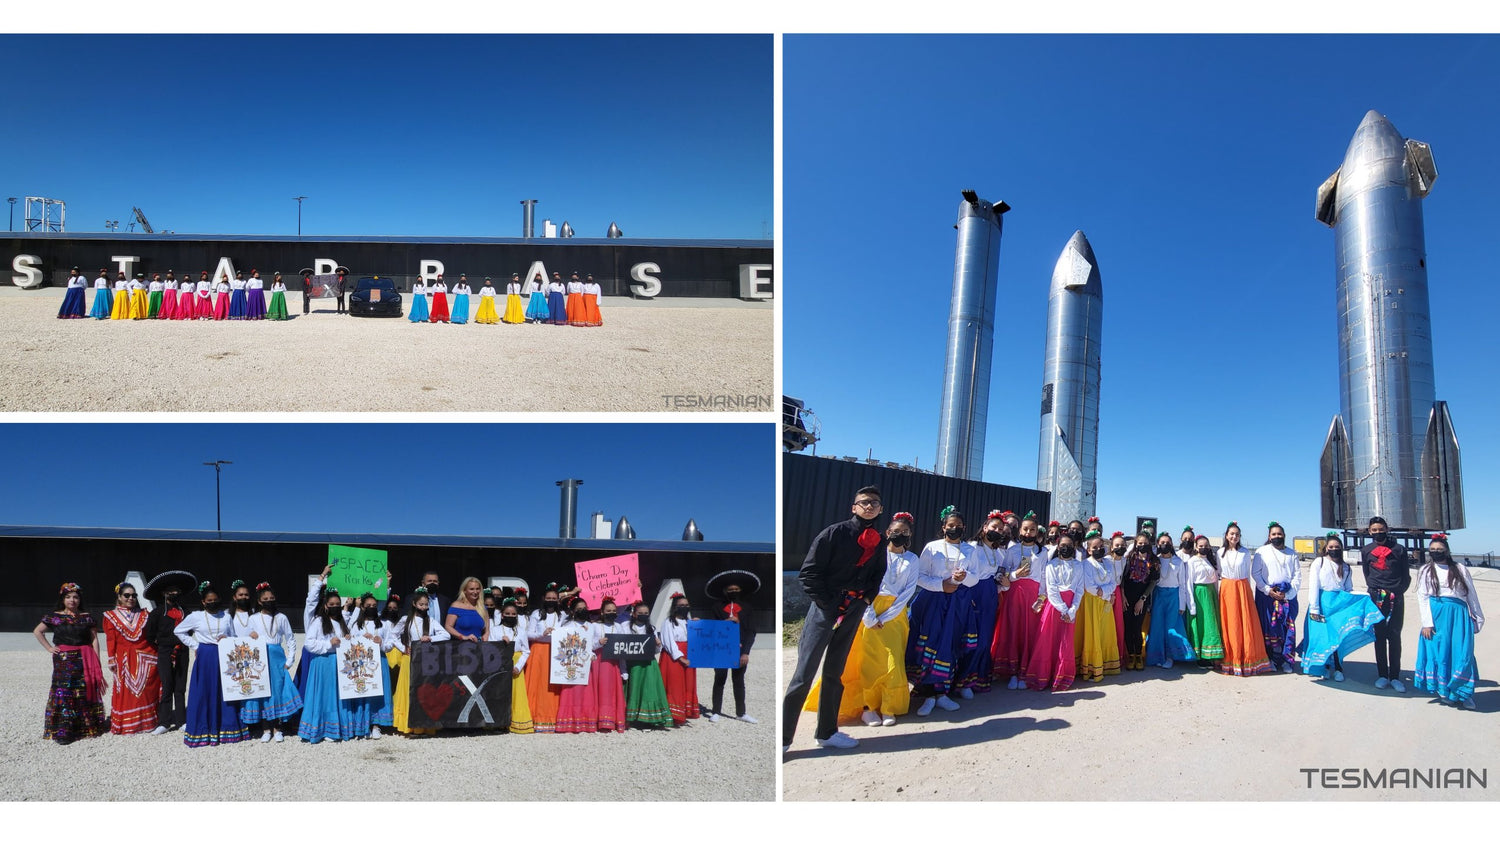 Elon Musk Accepts Brownsville Students 'Charro Days Fiesta' Invitation During 2022 SpaceX Starship Presentation